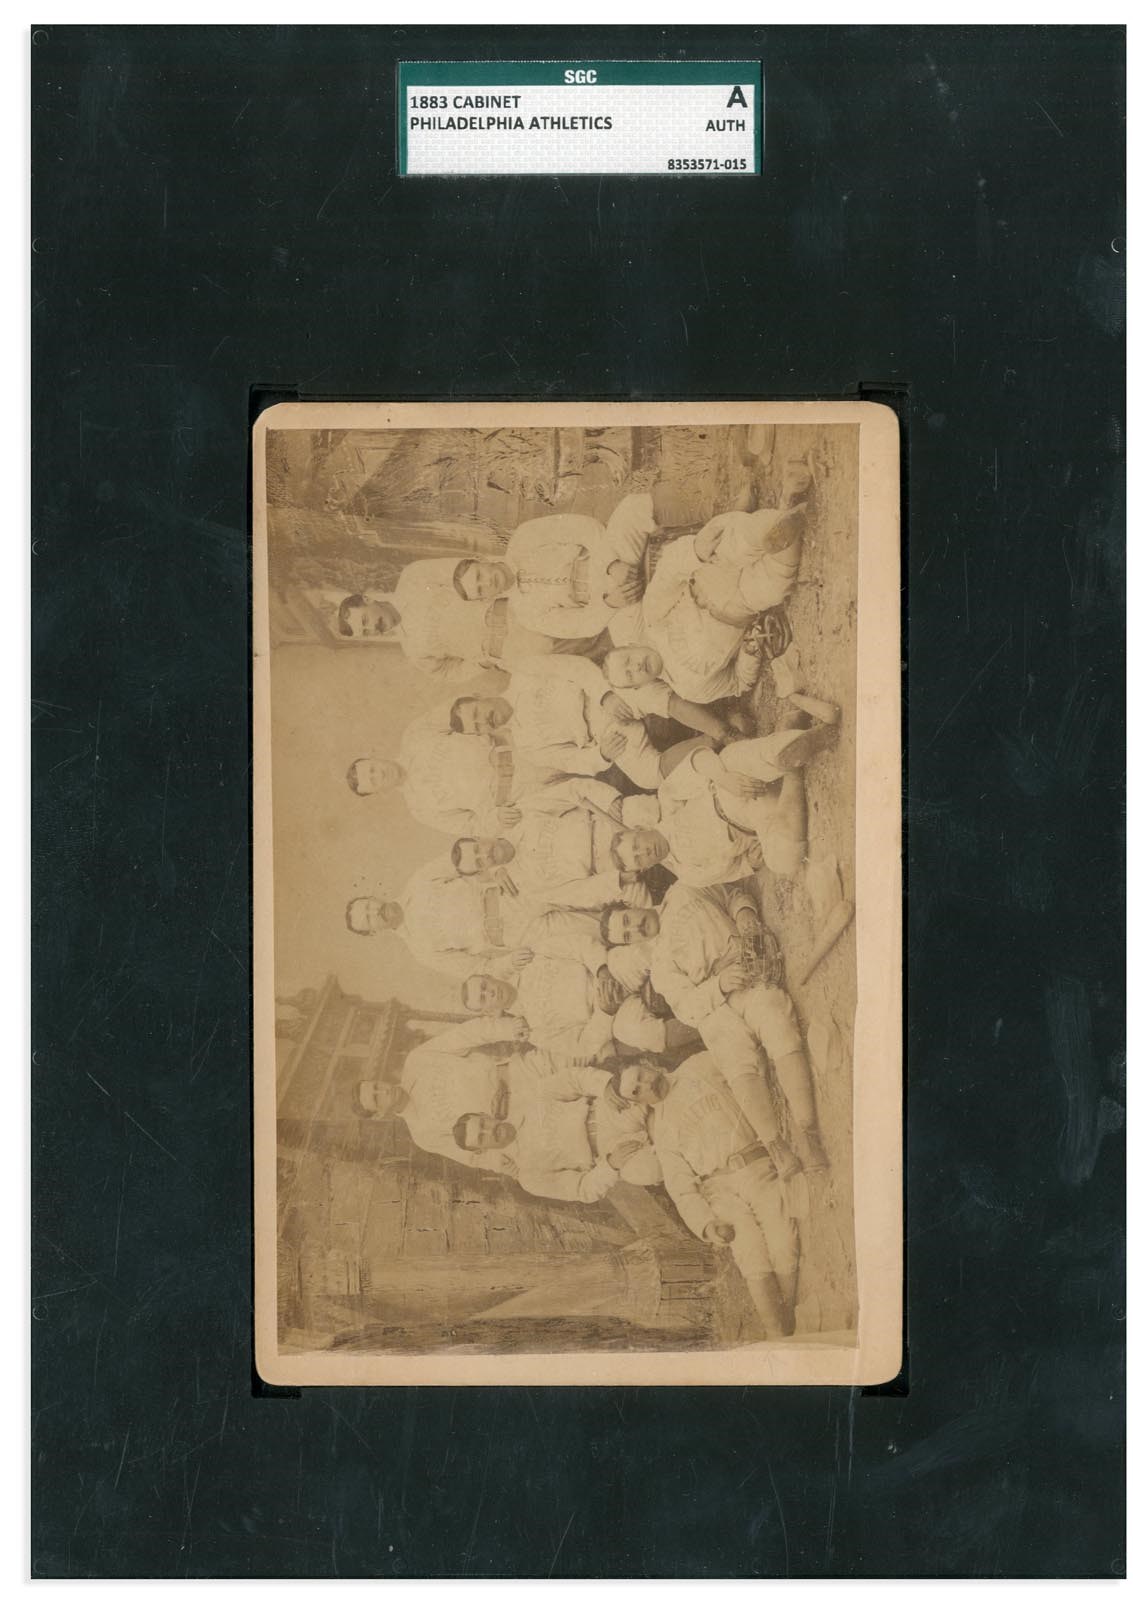 Early Baseball - 1883 Philadelphia Athletics Cabinet Photo (SGC A)